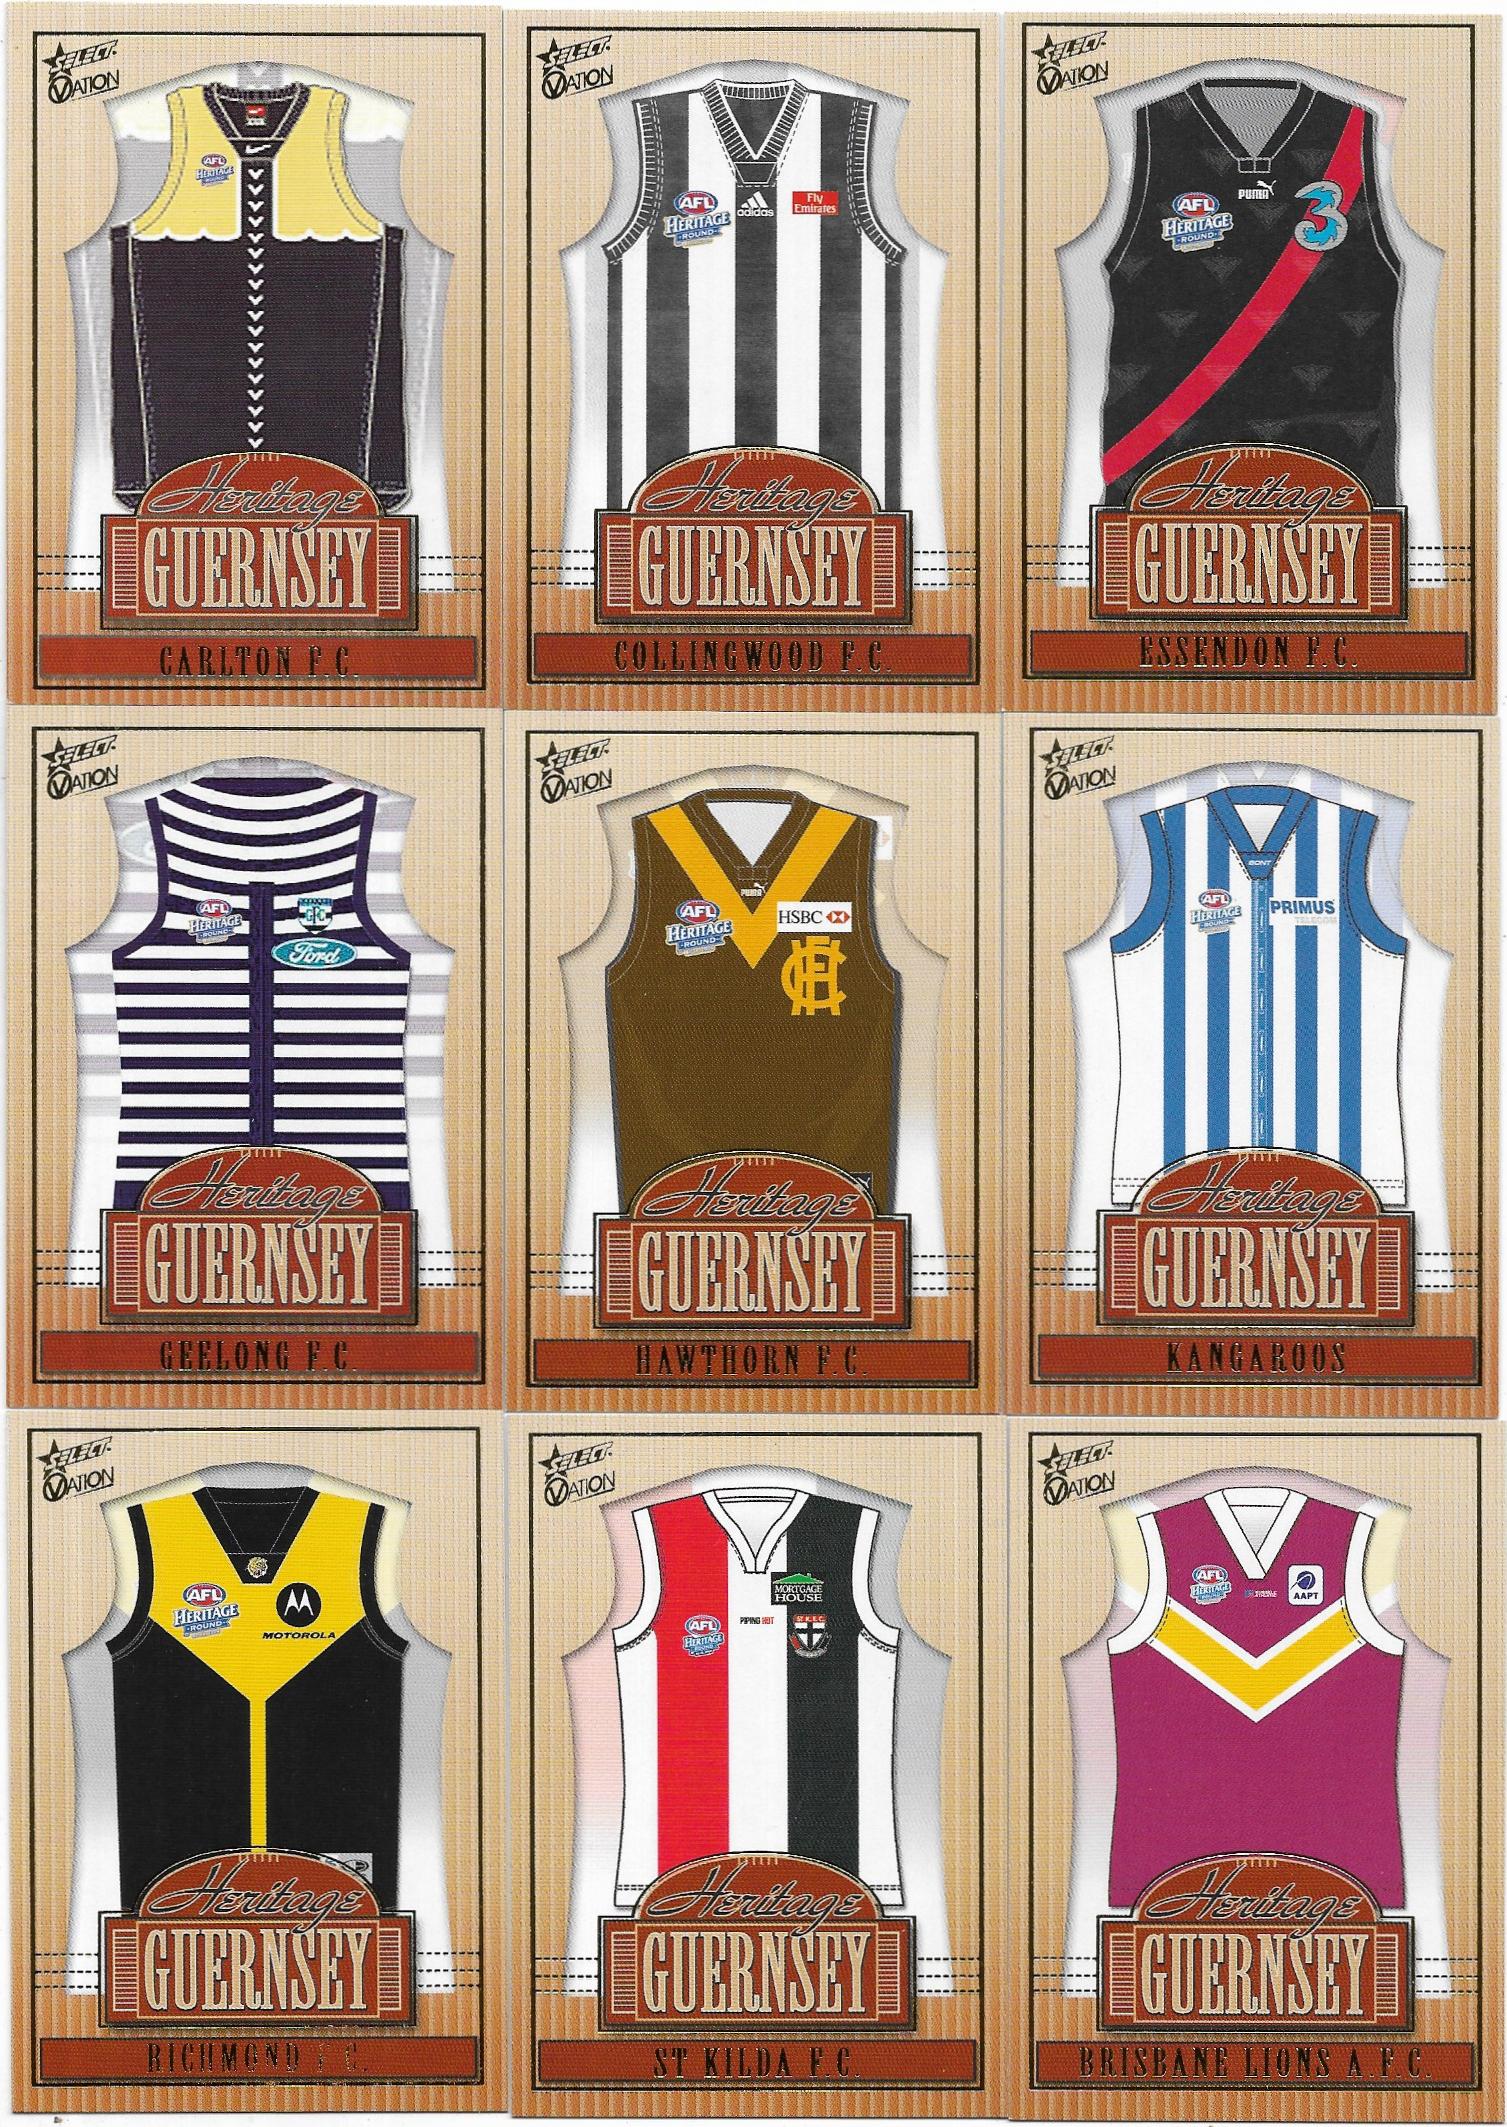 2004 Select Ovation Heritage Guernsey Full Set (16 Cards)